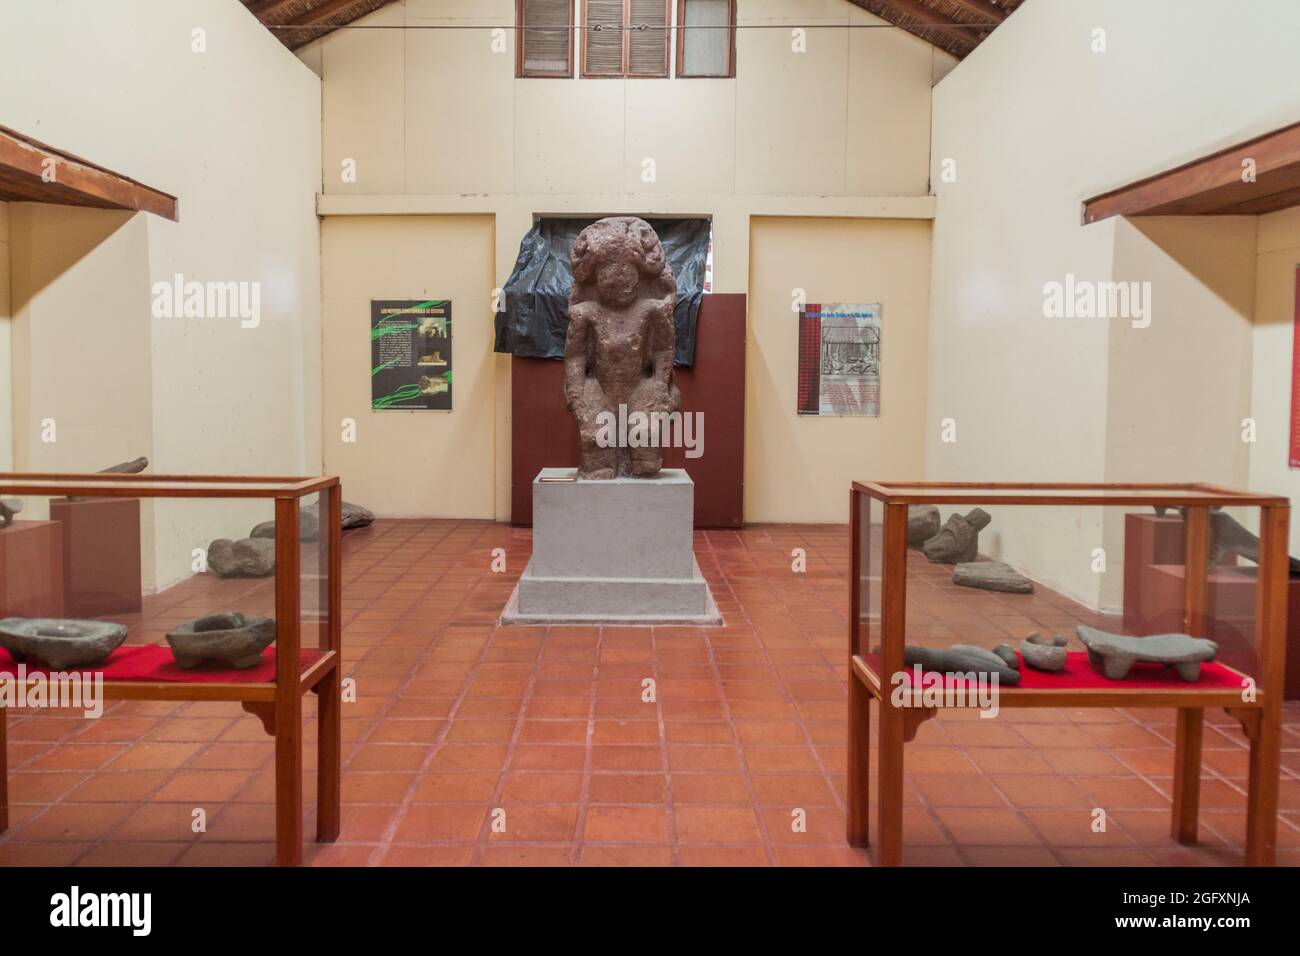 GRANADA, NICARAGUA - 27. APRIL 2016: Innenraum eines Museums im Kloster San Francisco in Granada, Nicaragua Stockfoto